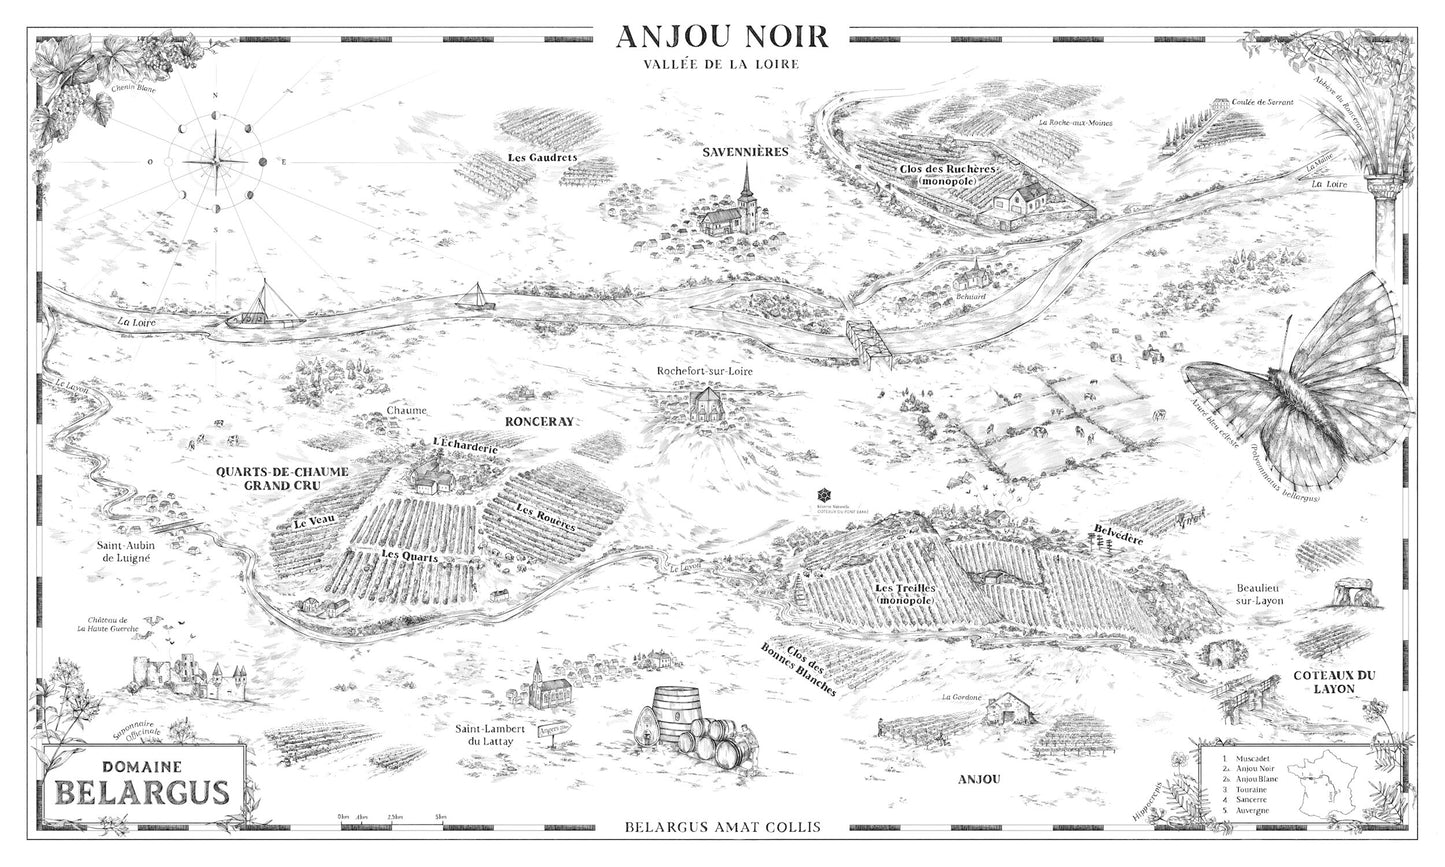 Anjou Noir, Domaine Belargus